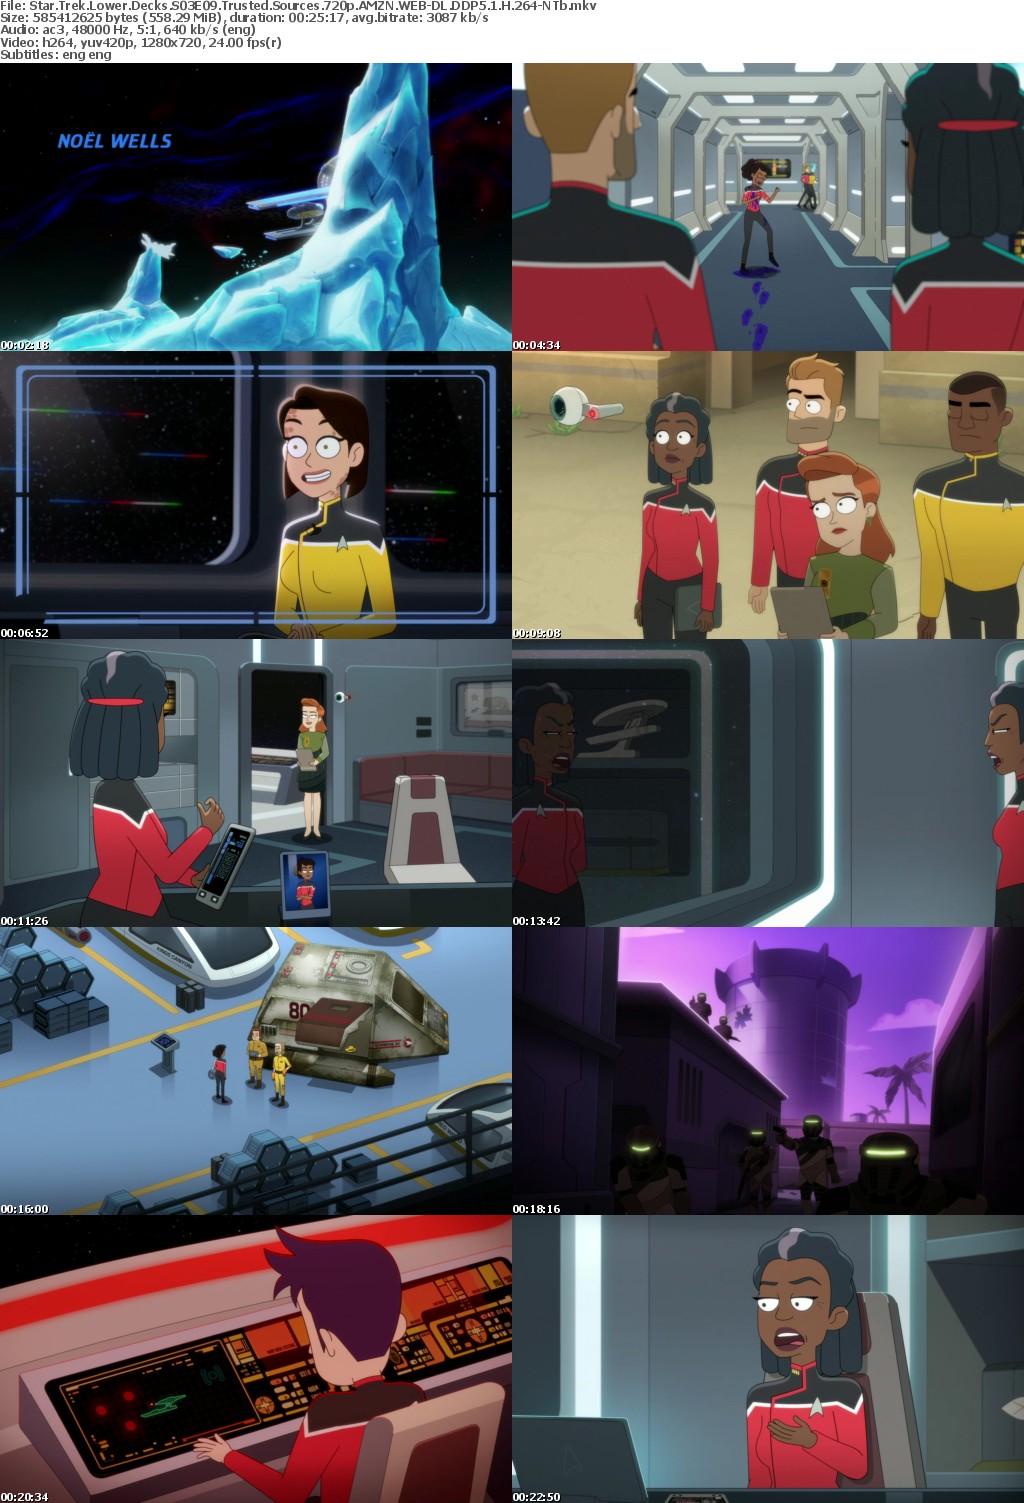 Star Trek Lower Decks S03E09 Trusted Sources 720p AMZN WEBRip DDP5 1 x264-NTb